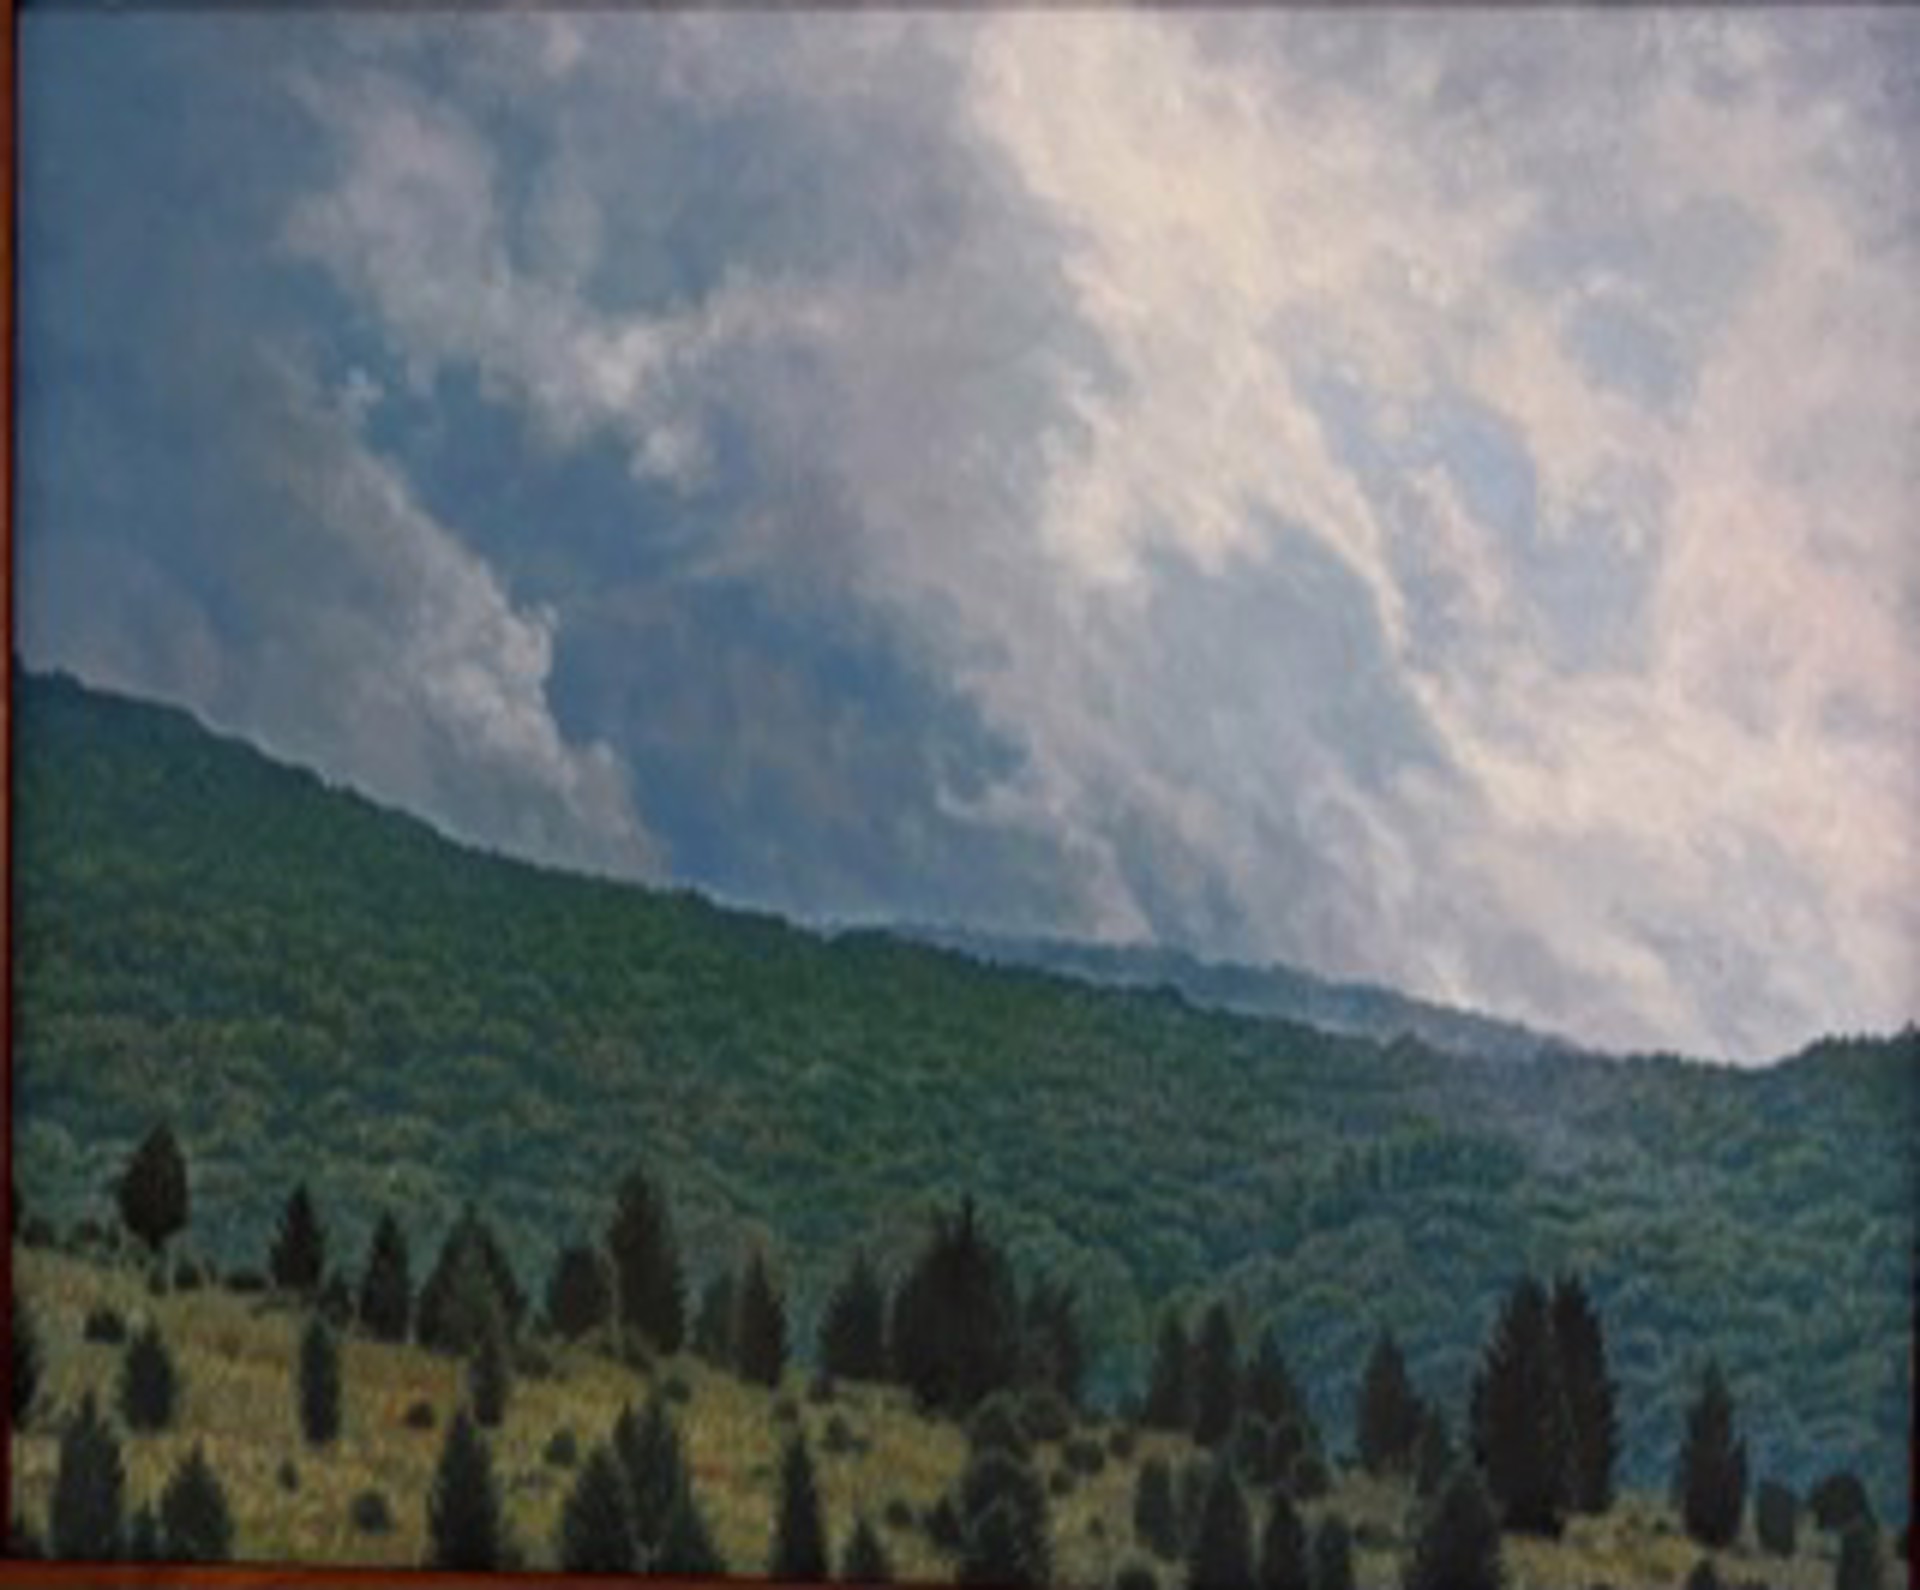 Cedars in the Storm - Study by Peter Krobath